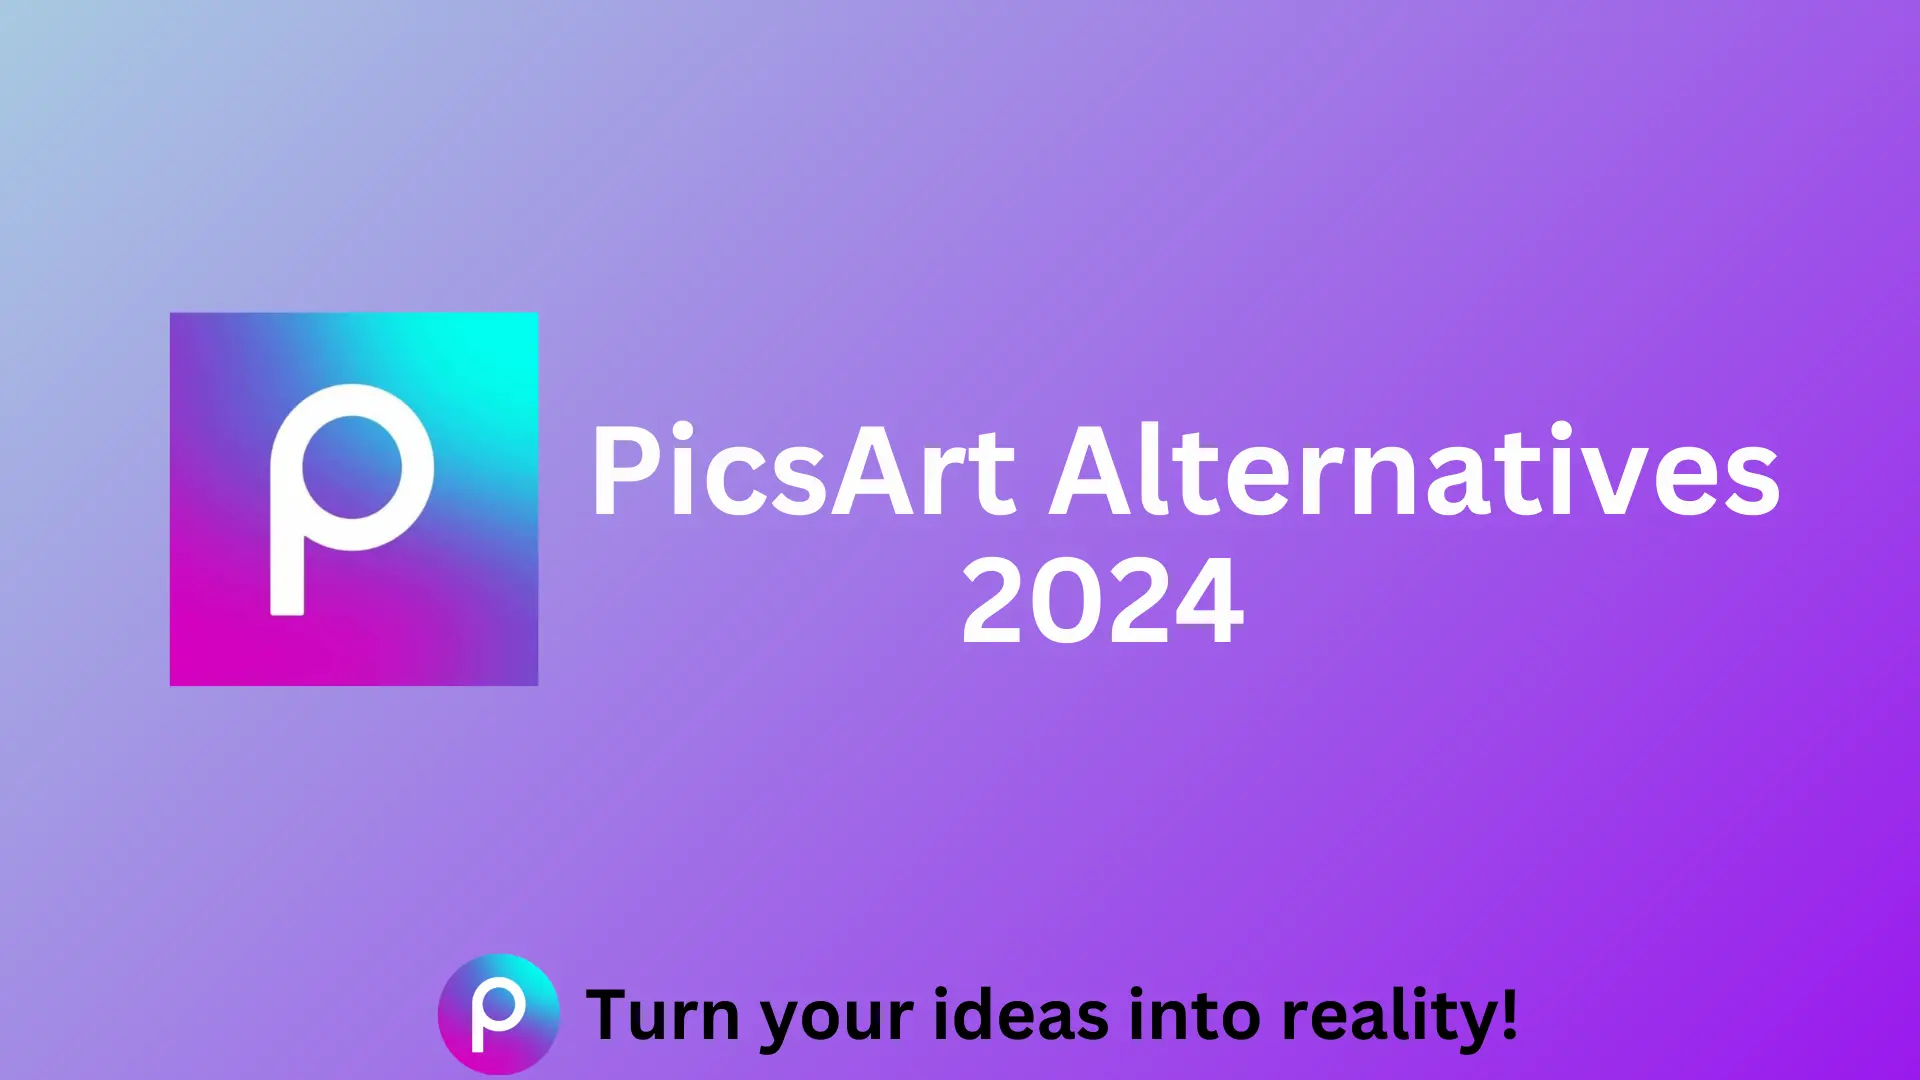 picsart alternatives feature image